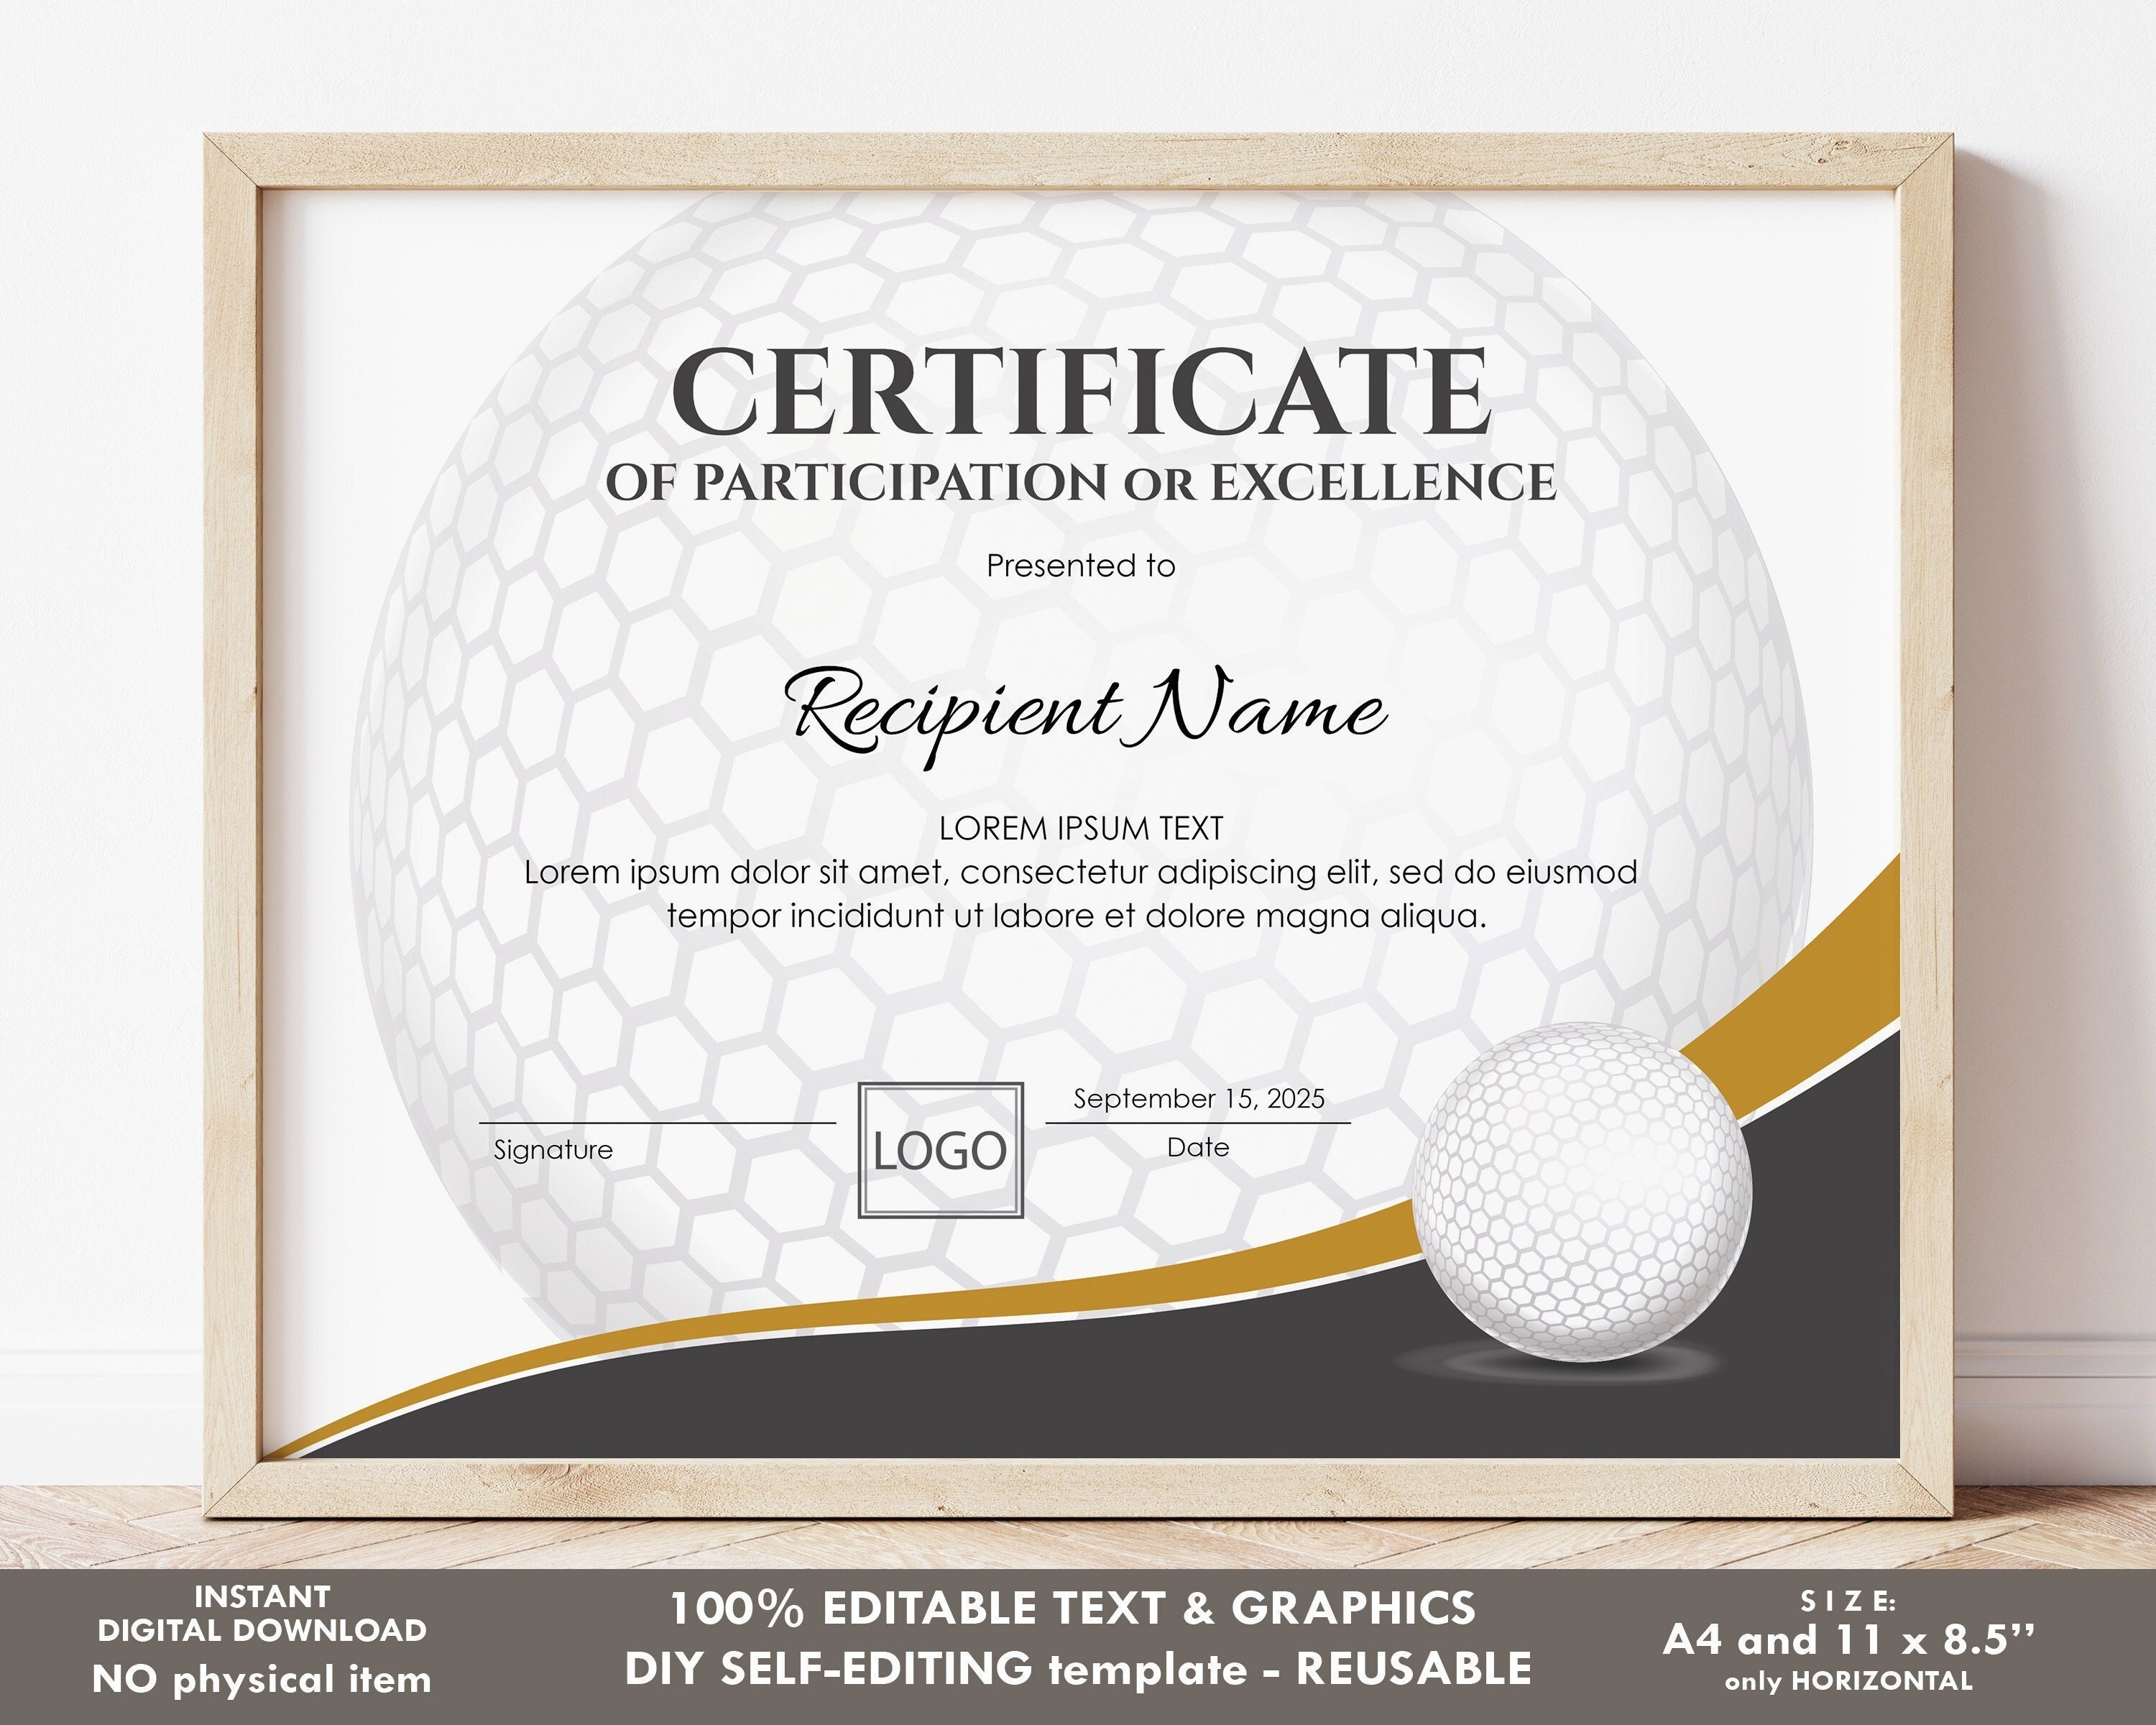 Golf Gift Certificate Template (4) Templates Example Inside Golf  Certificate Templates For Word